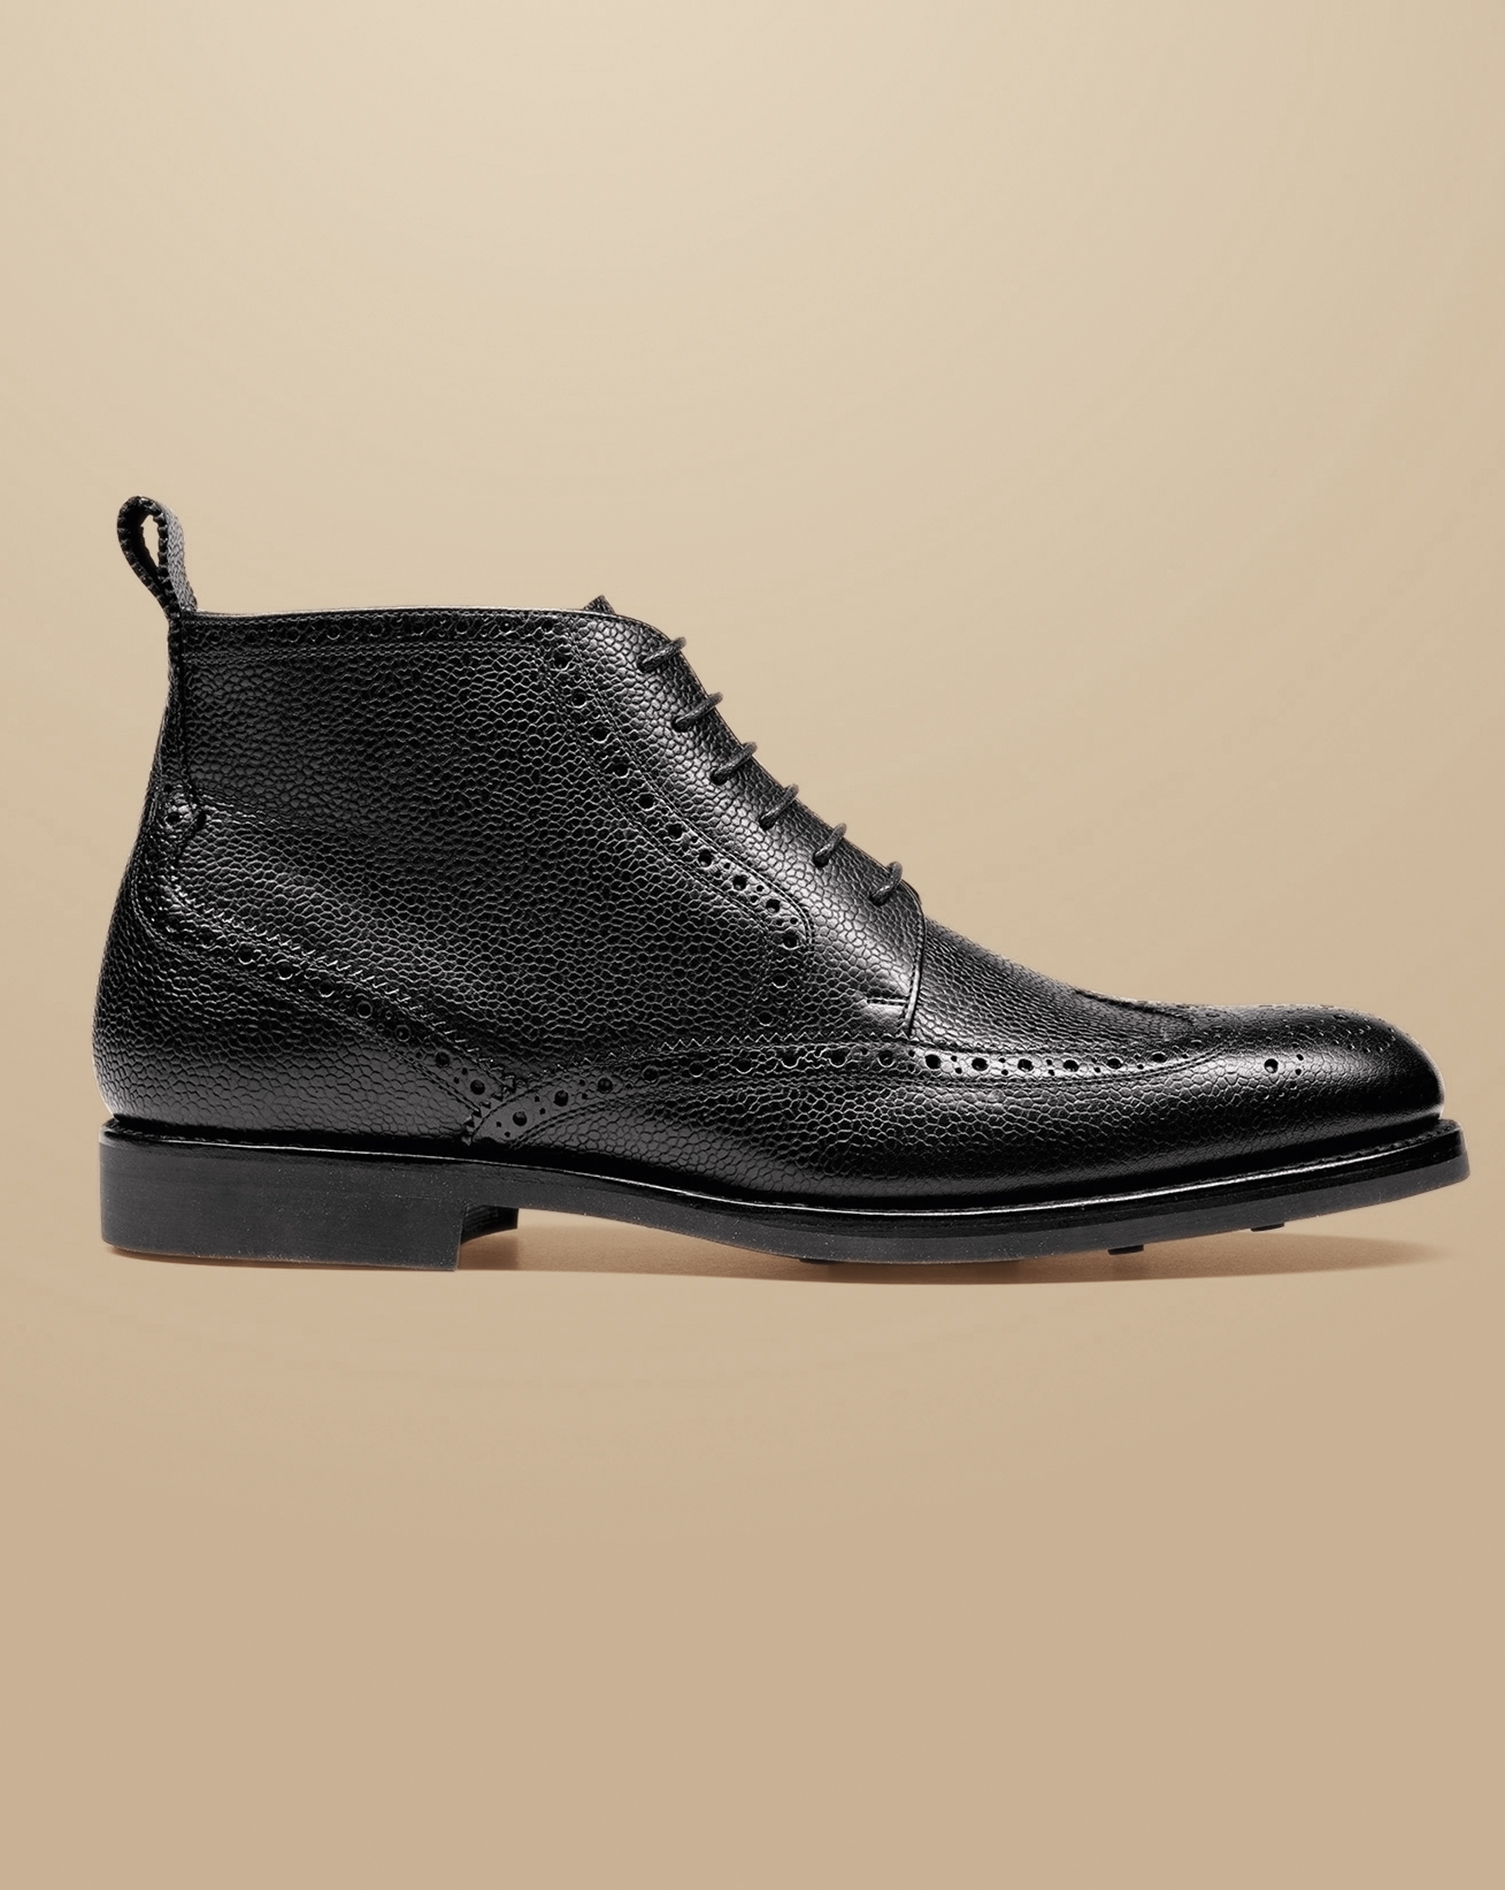 Men's Charles Tyrwhitt Brogue Boots - Black Size 9 Leather
